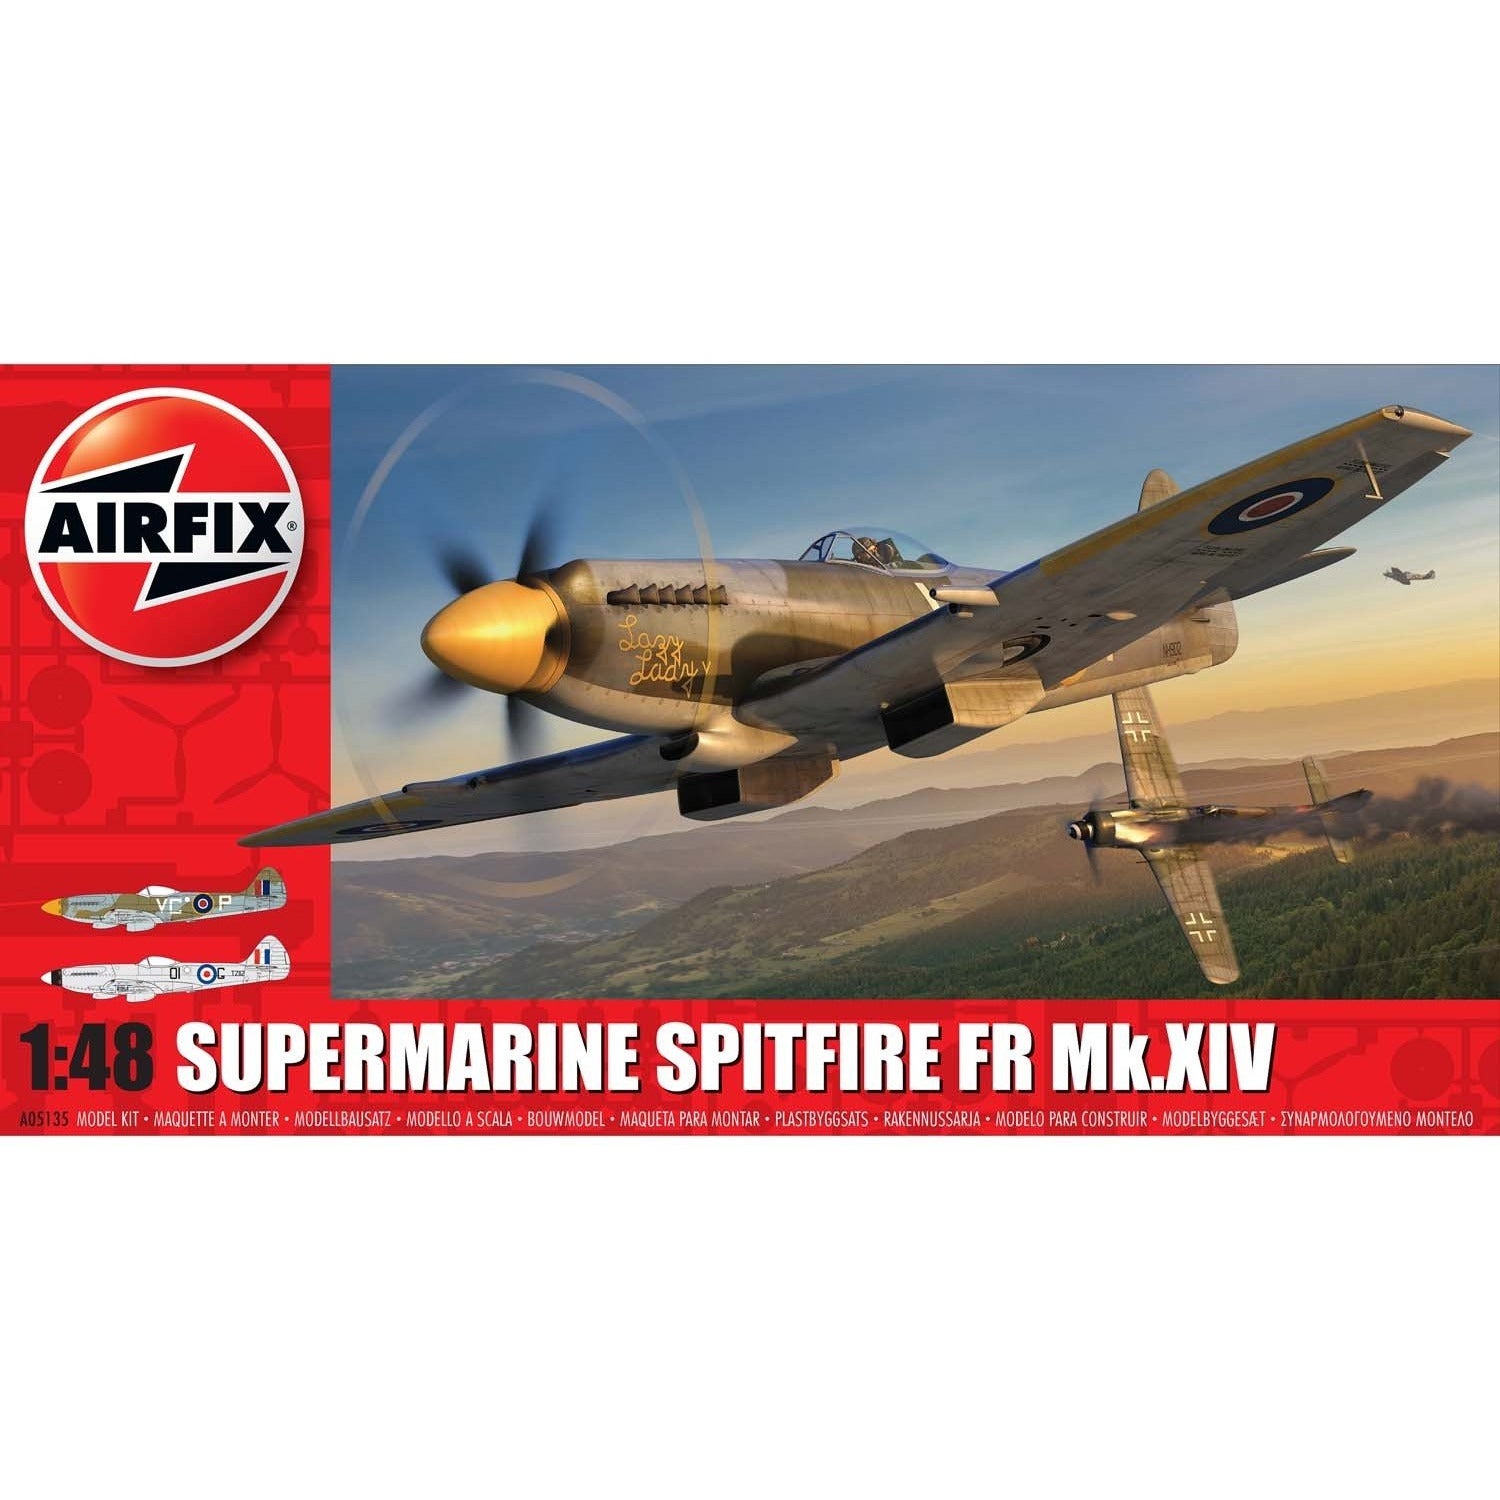 Supermarine Spitfire FR Mk. XIV 1/48 by Airfix